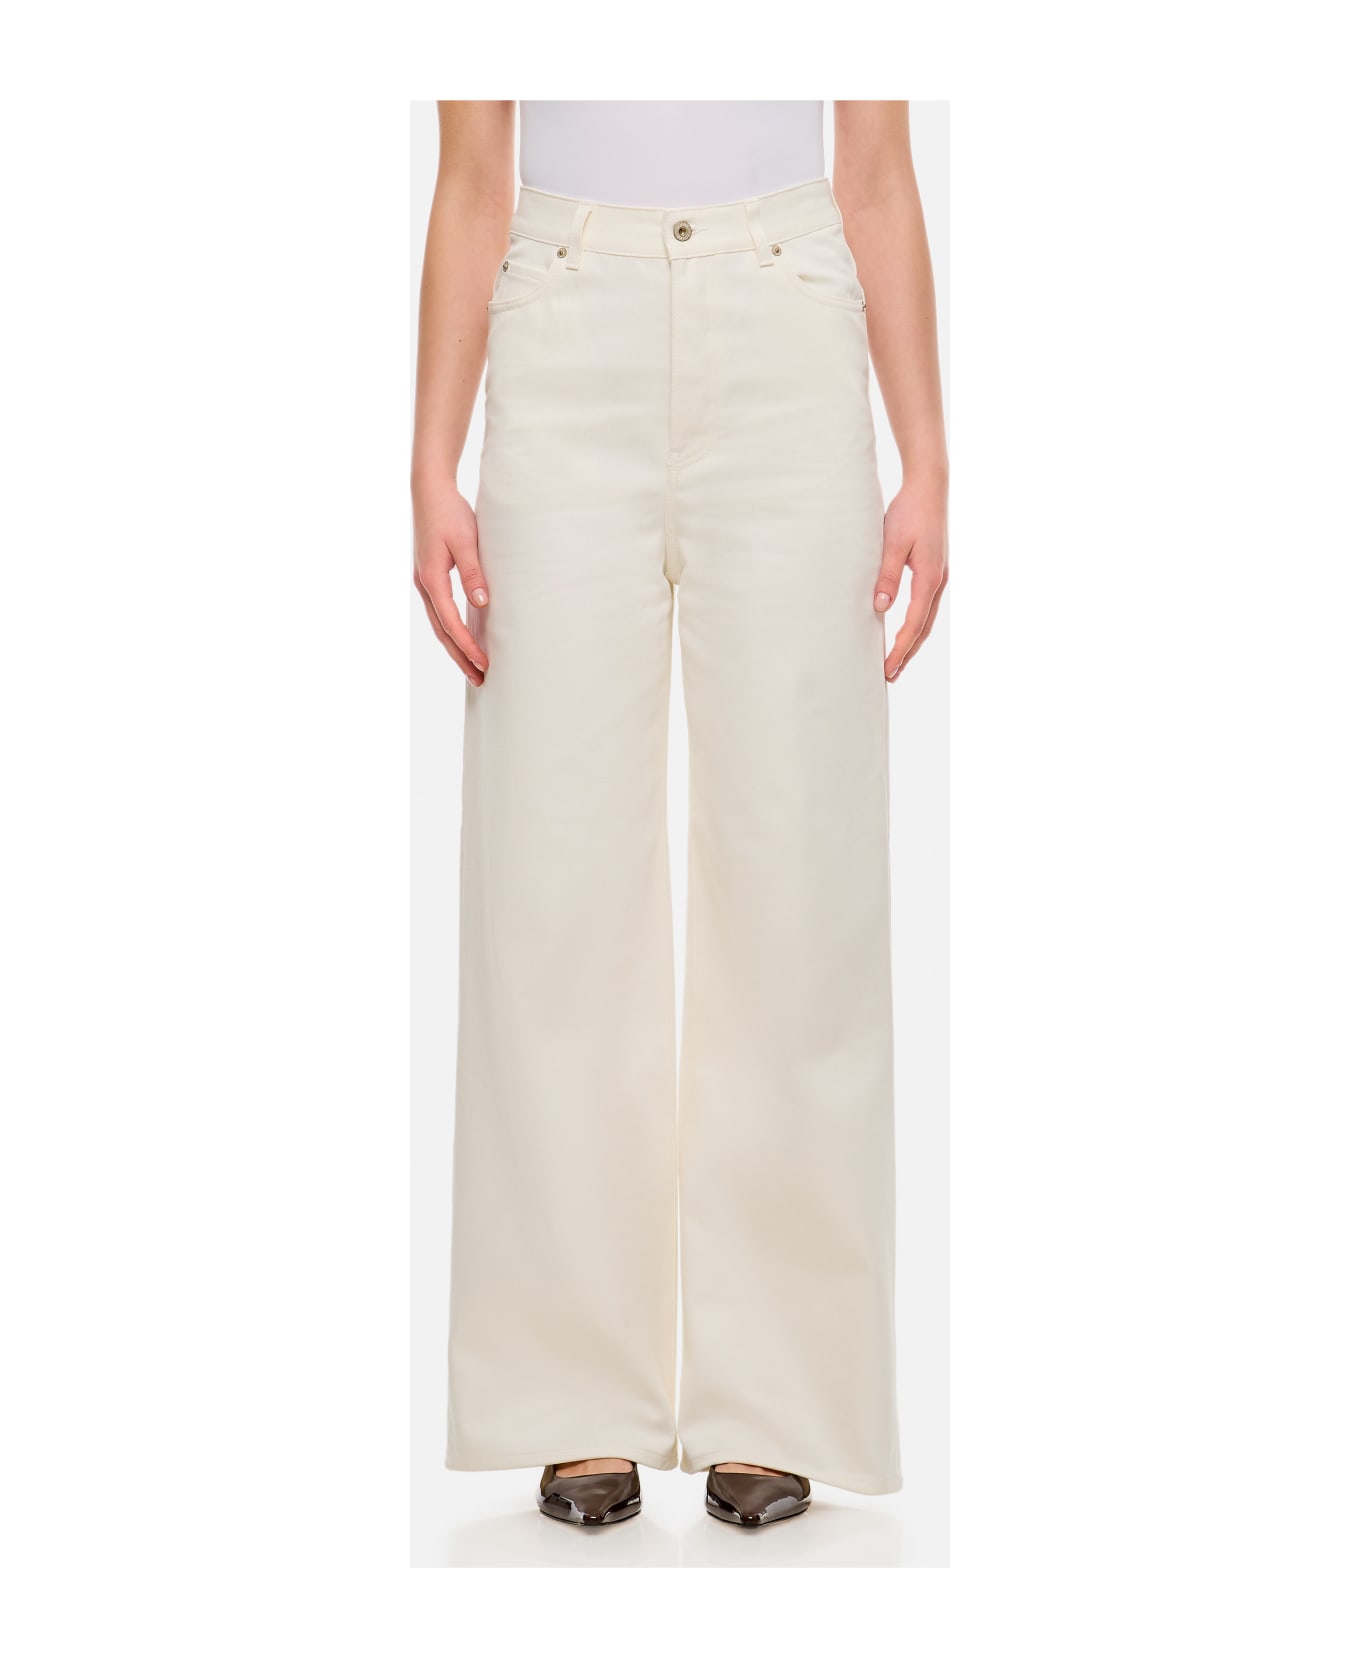 Loewe High Waisted Jeans - White ボトムス